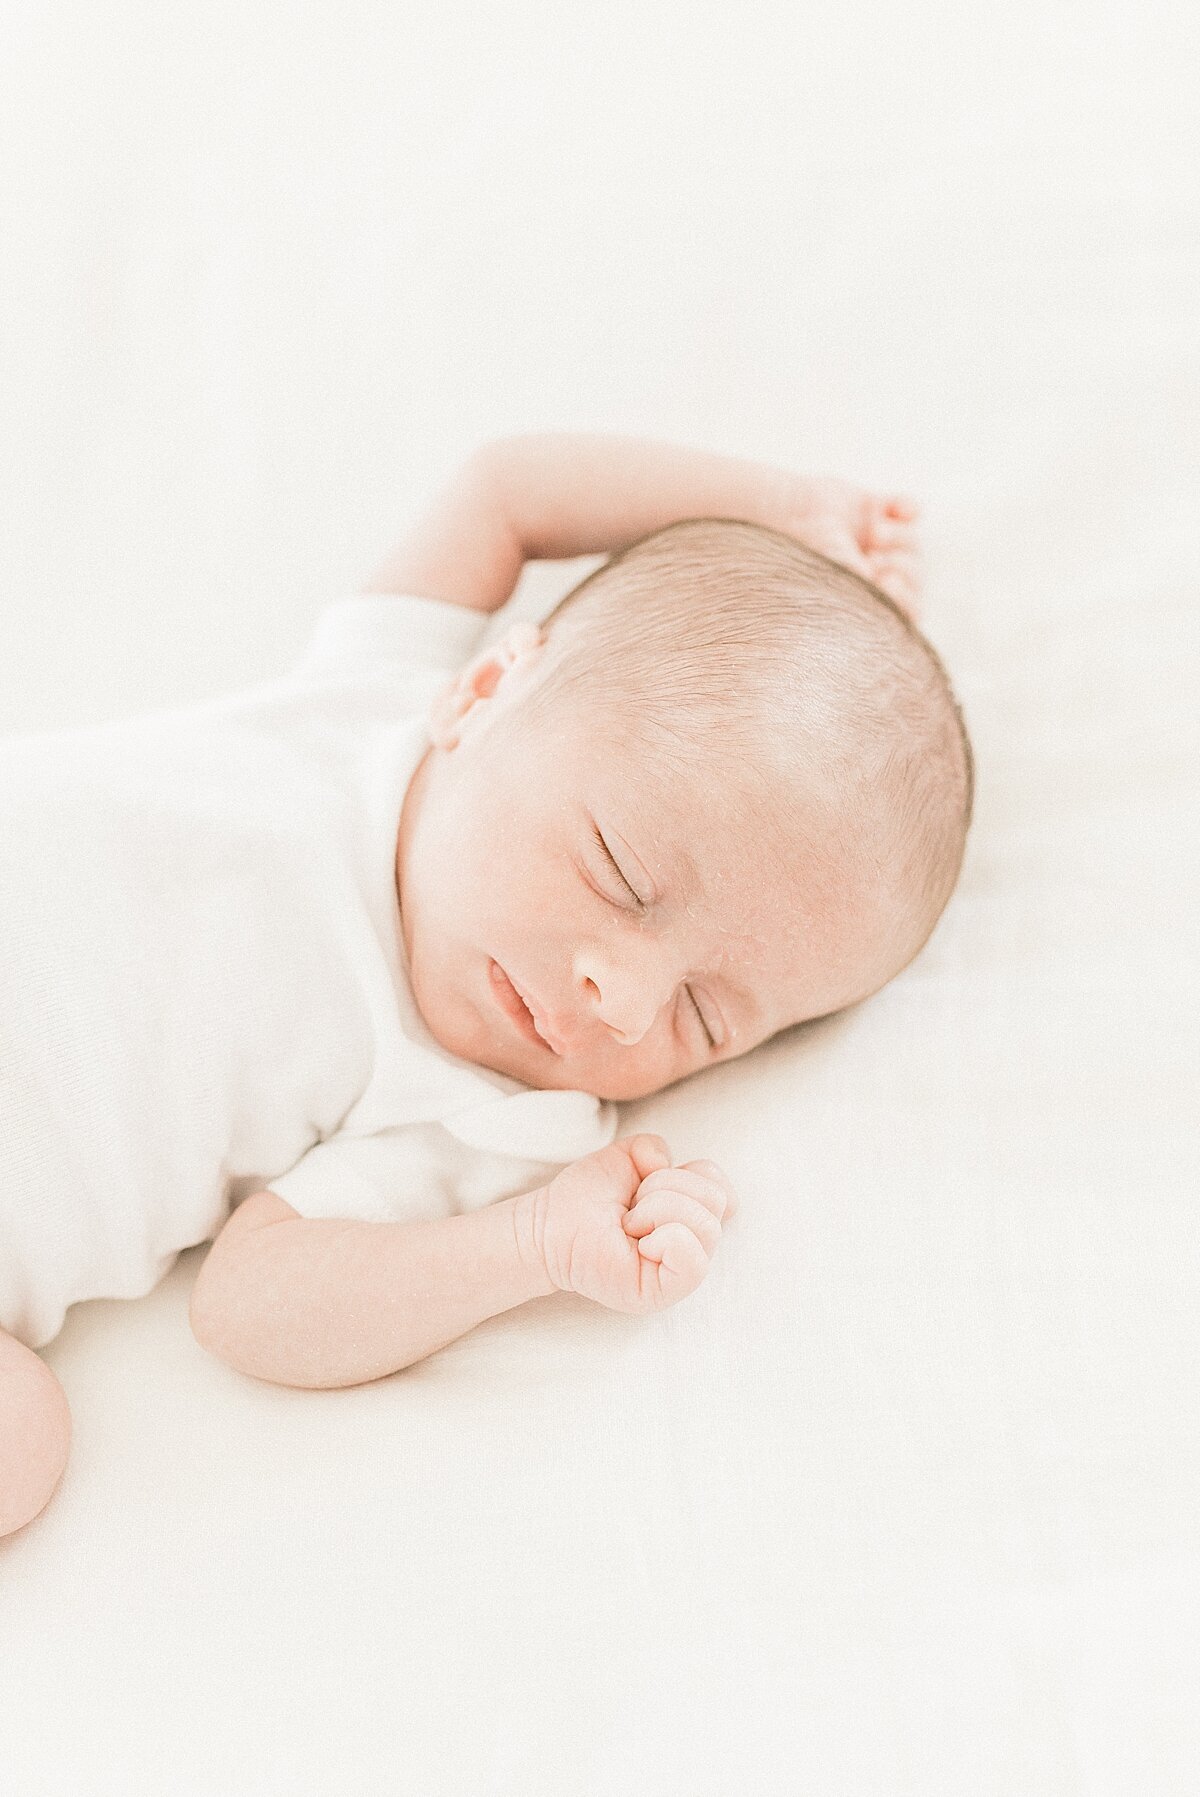 charleston-baby-photographer-twin-newborn-session-caitlyn-motycka-photography_0006